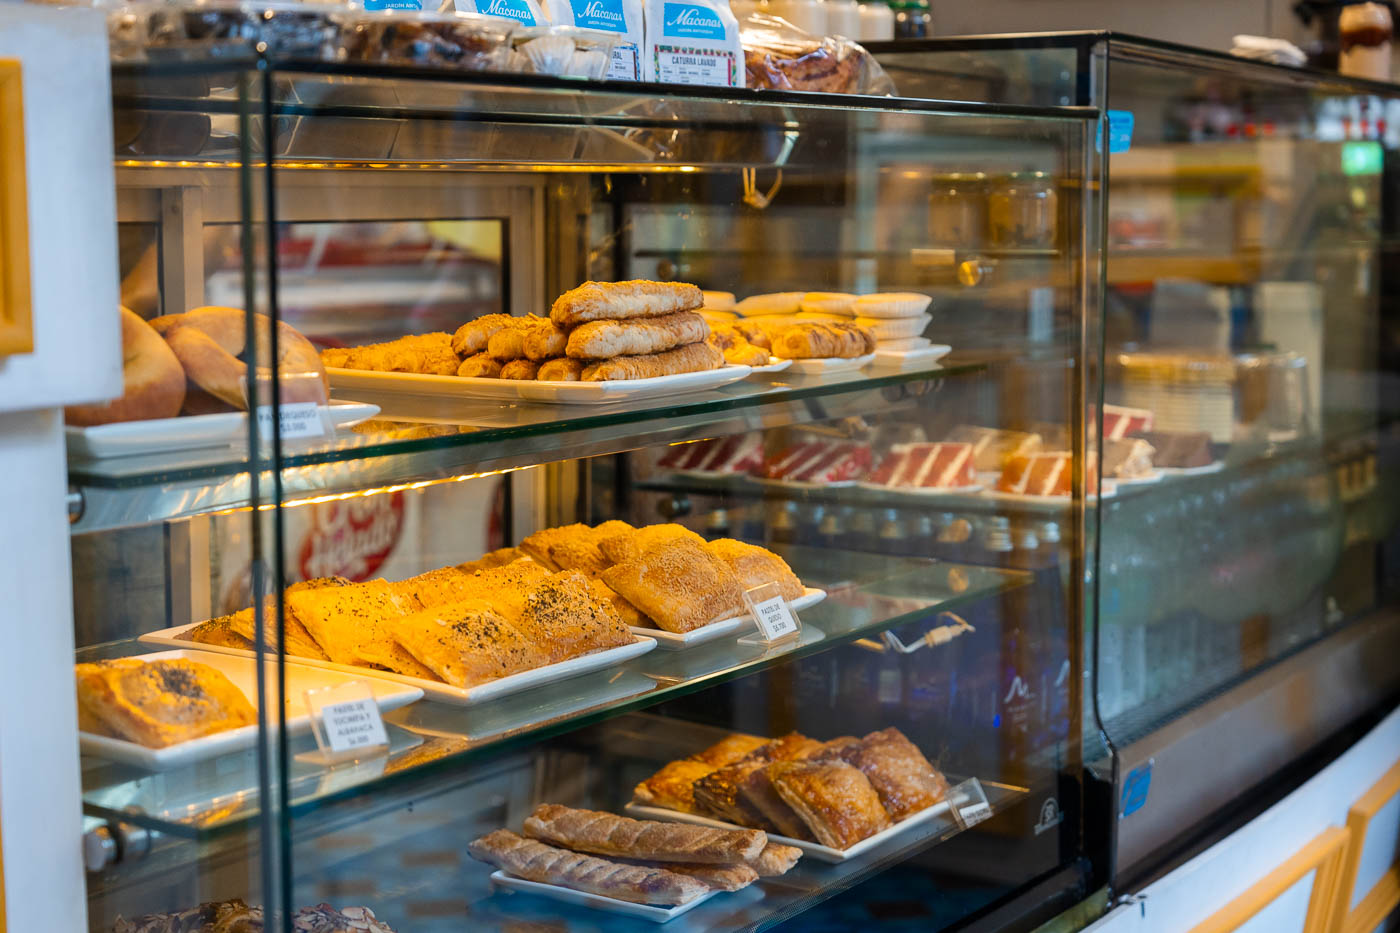 Trays of baked goods on glass shelves inside Cafe Macanas.